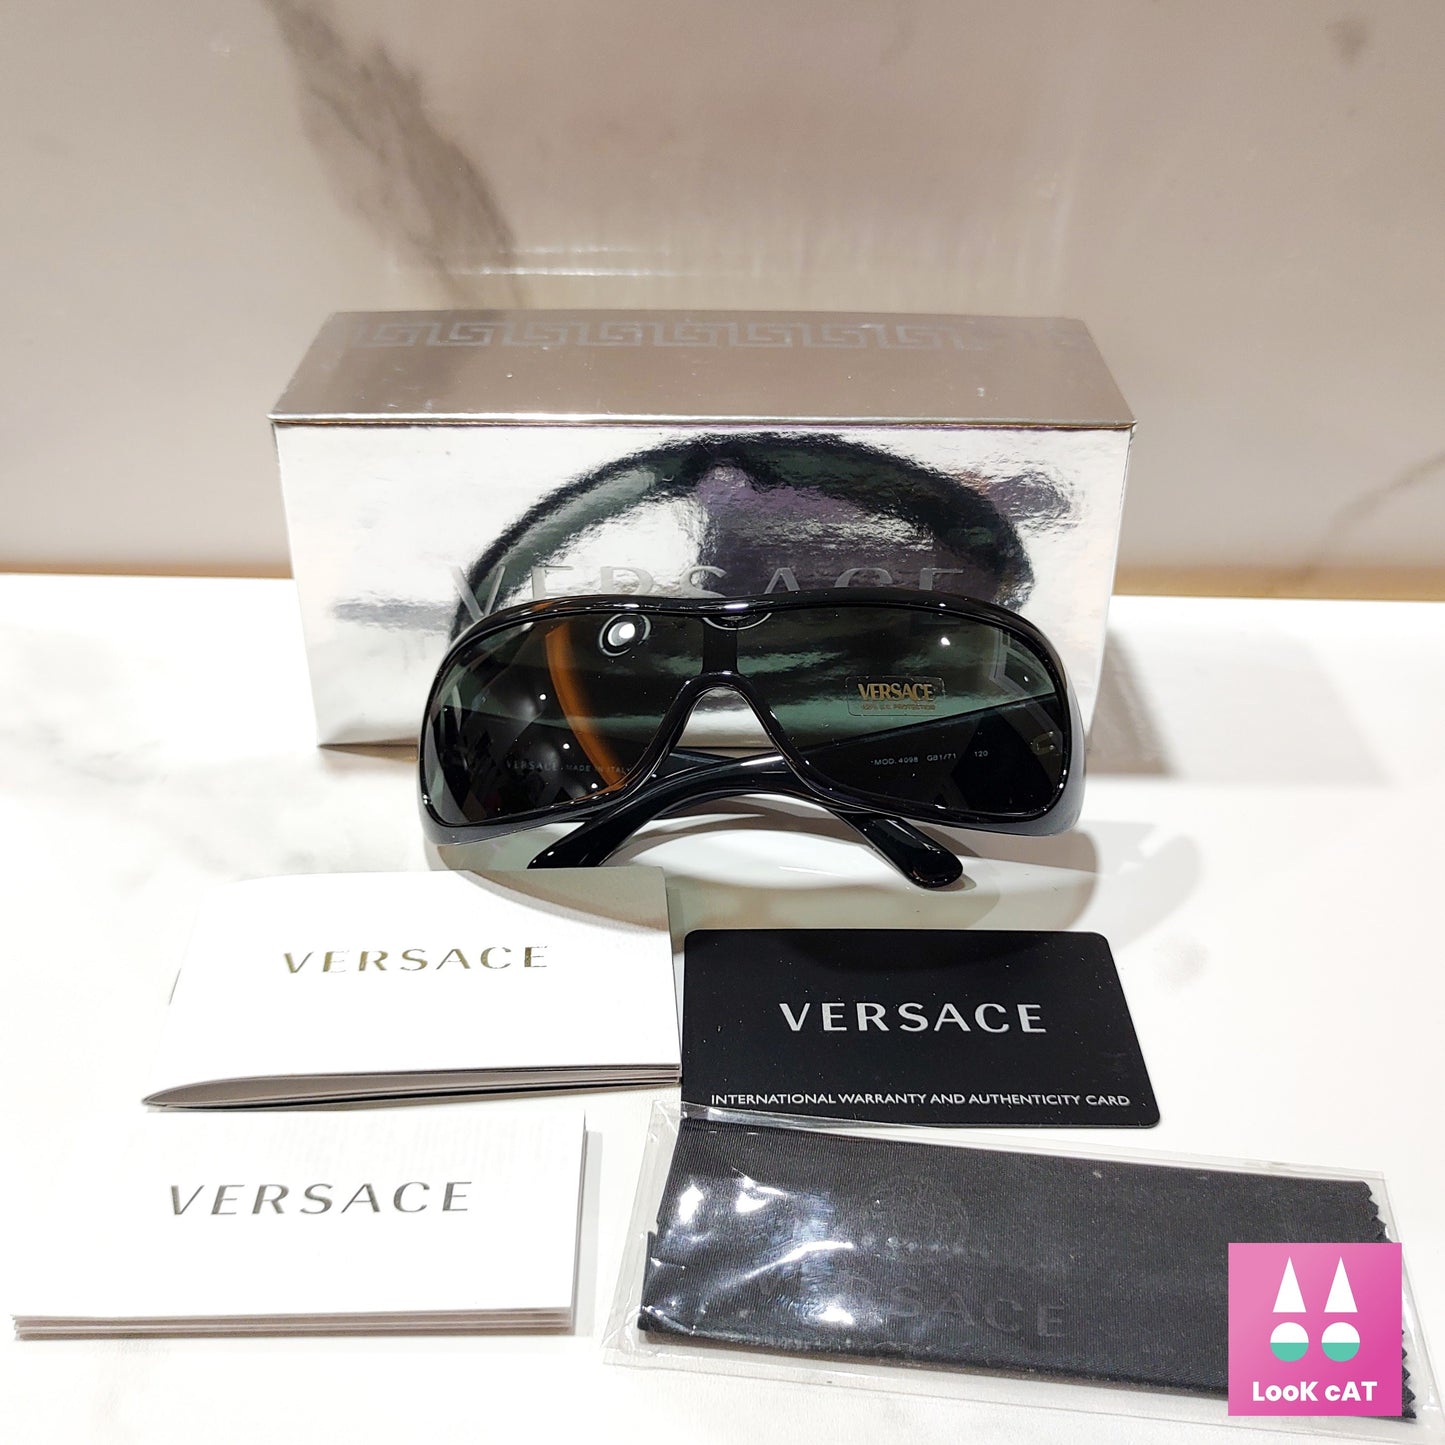 Versace 4098 occhiali da sole vintage wrap shield NOS mai usatiocchiali gafas 90s y2k